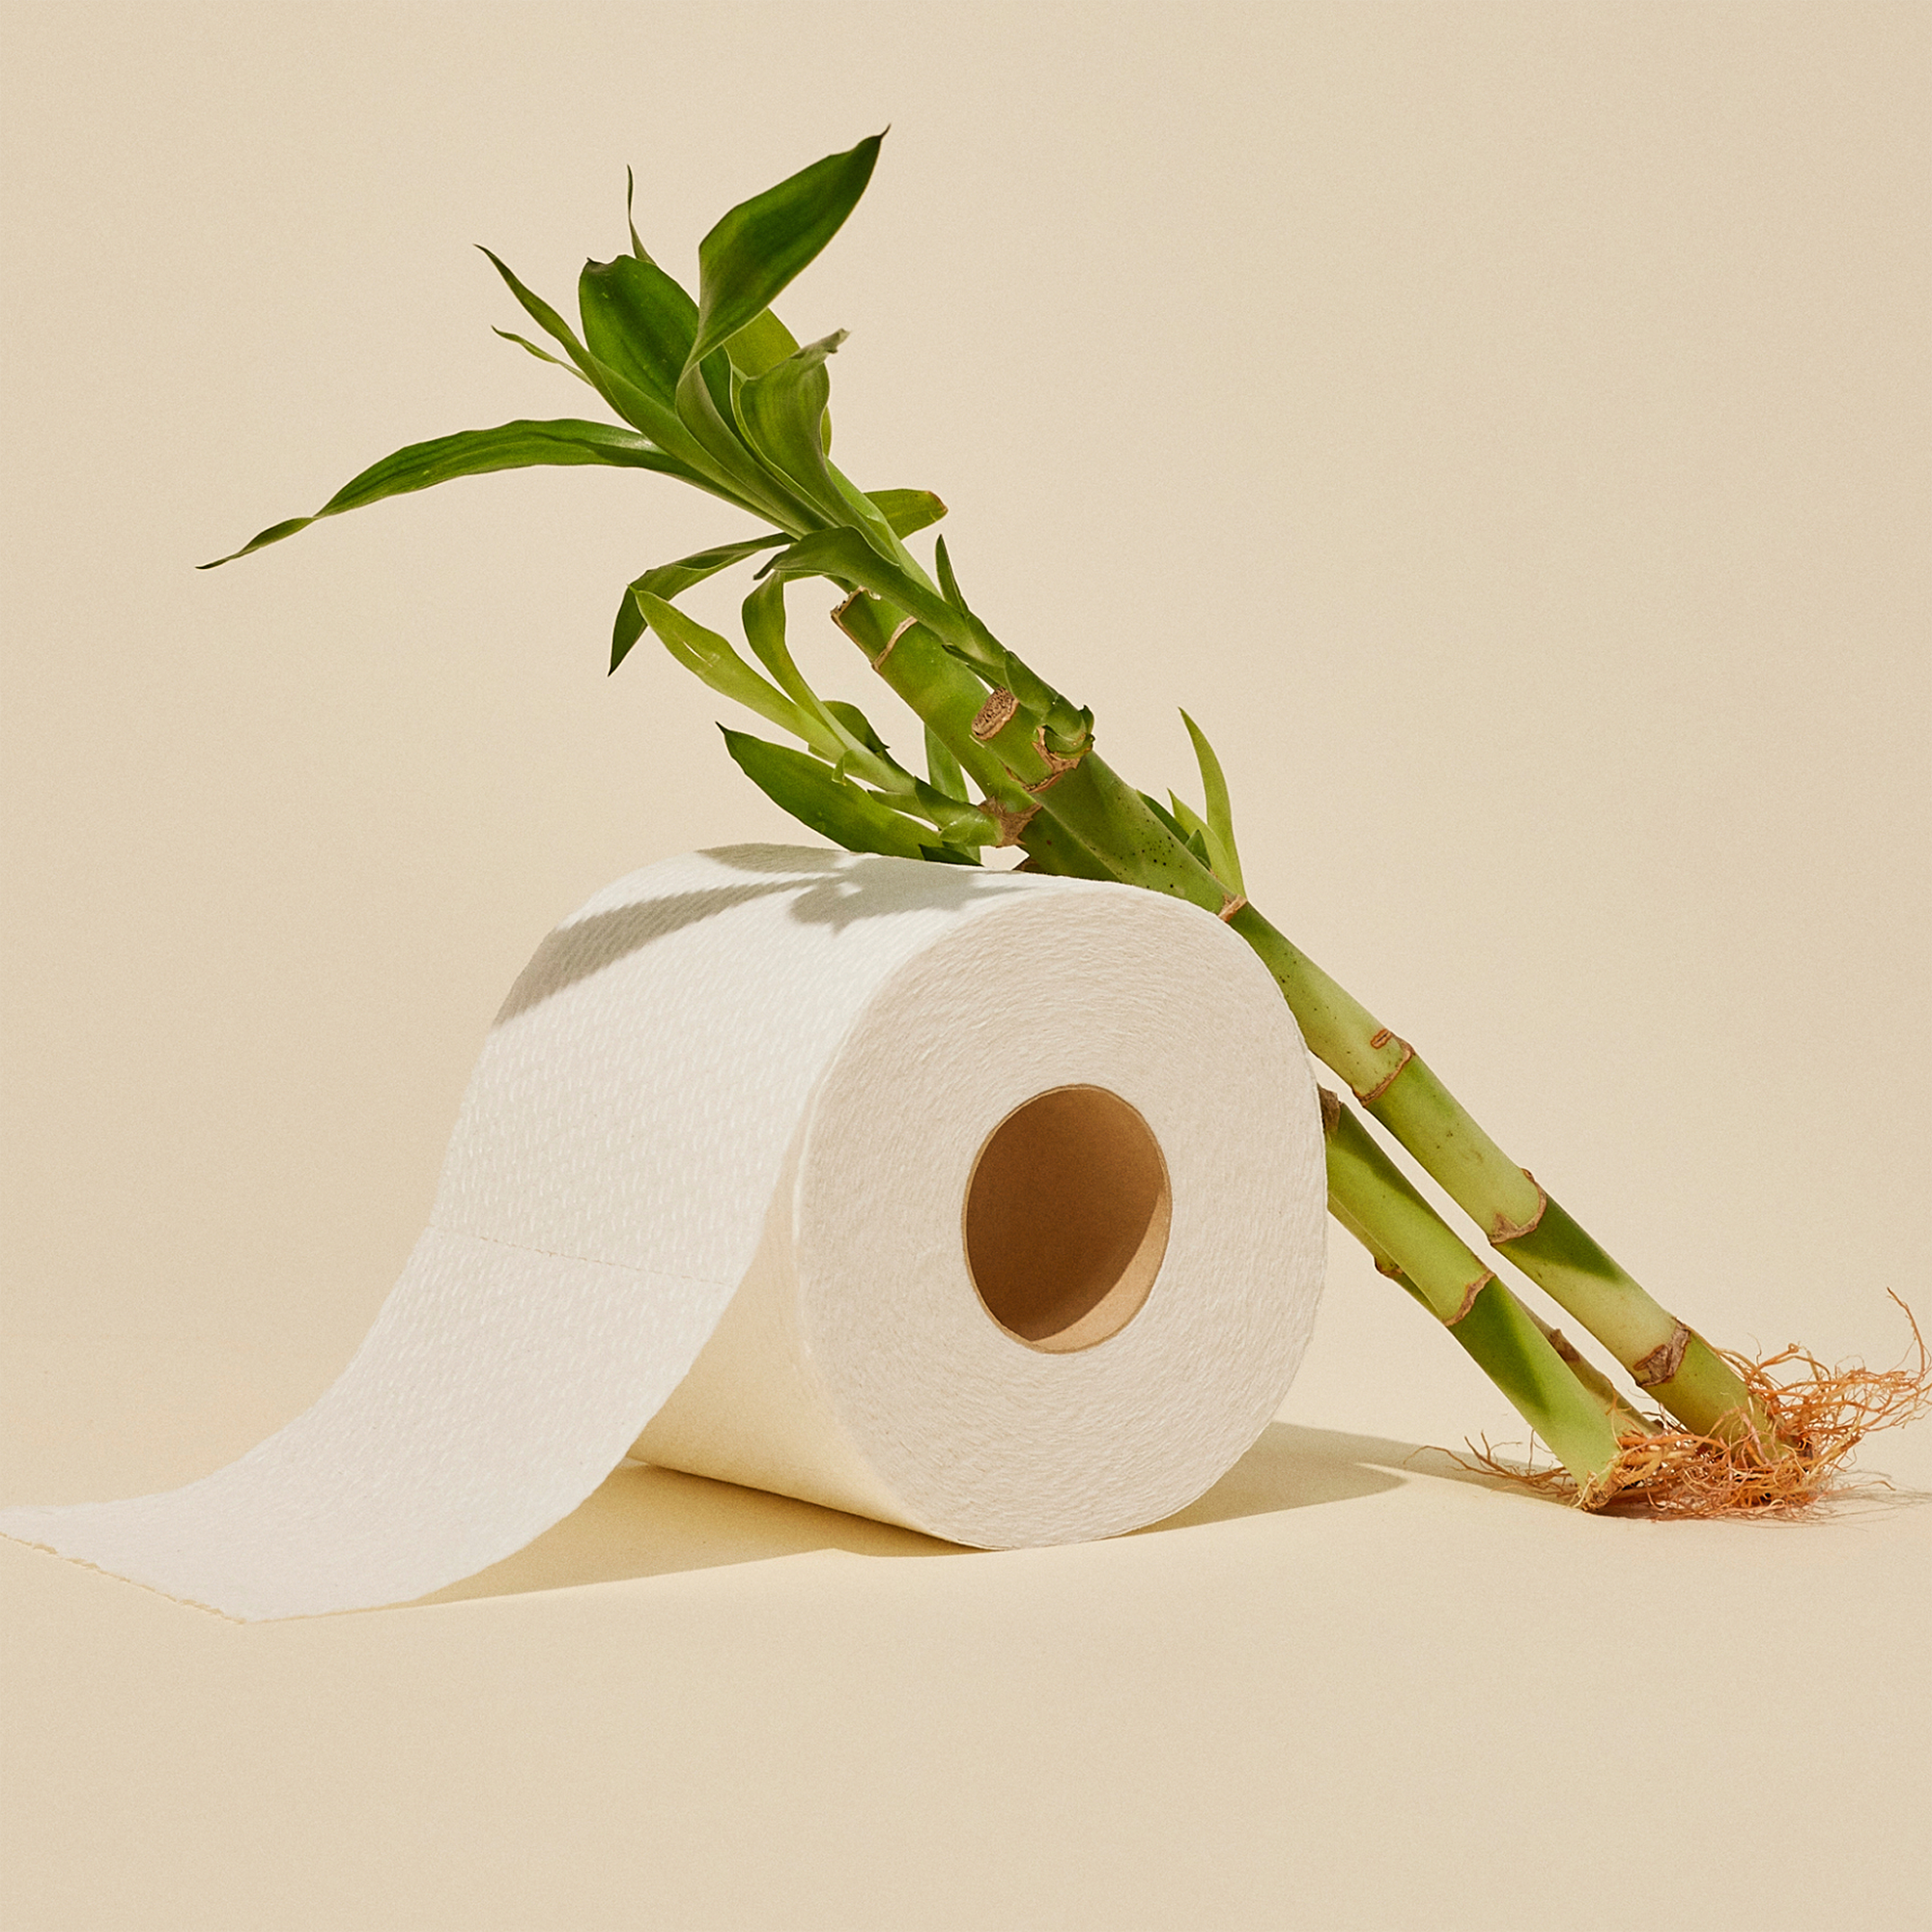 Premium Bamboo Toilet Paper - 24 Rolls, 3-Ply